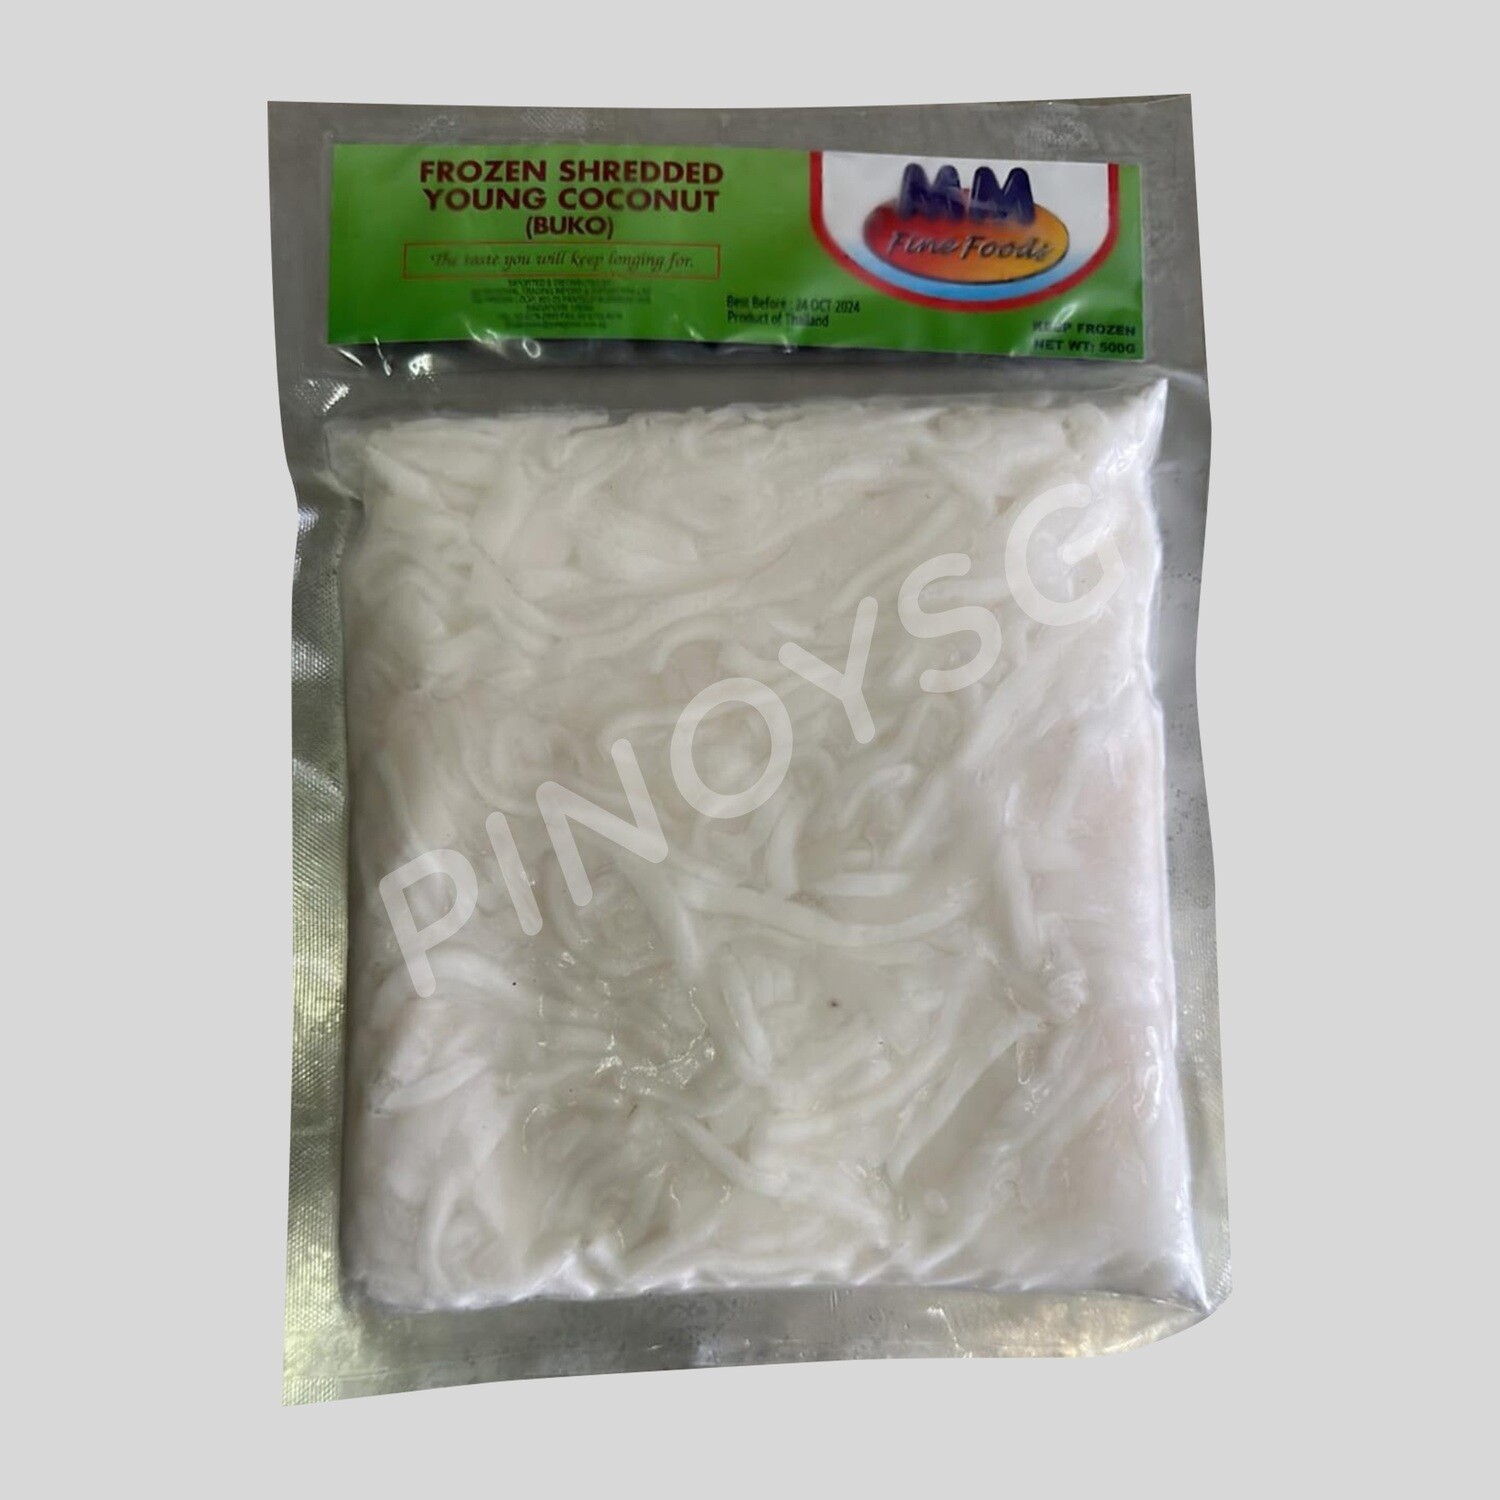 MM Fine Foods Frozen Shredded Young Coconut (Buko) 500g